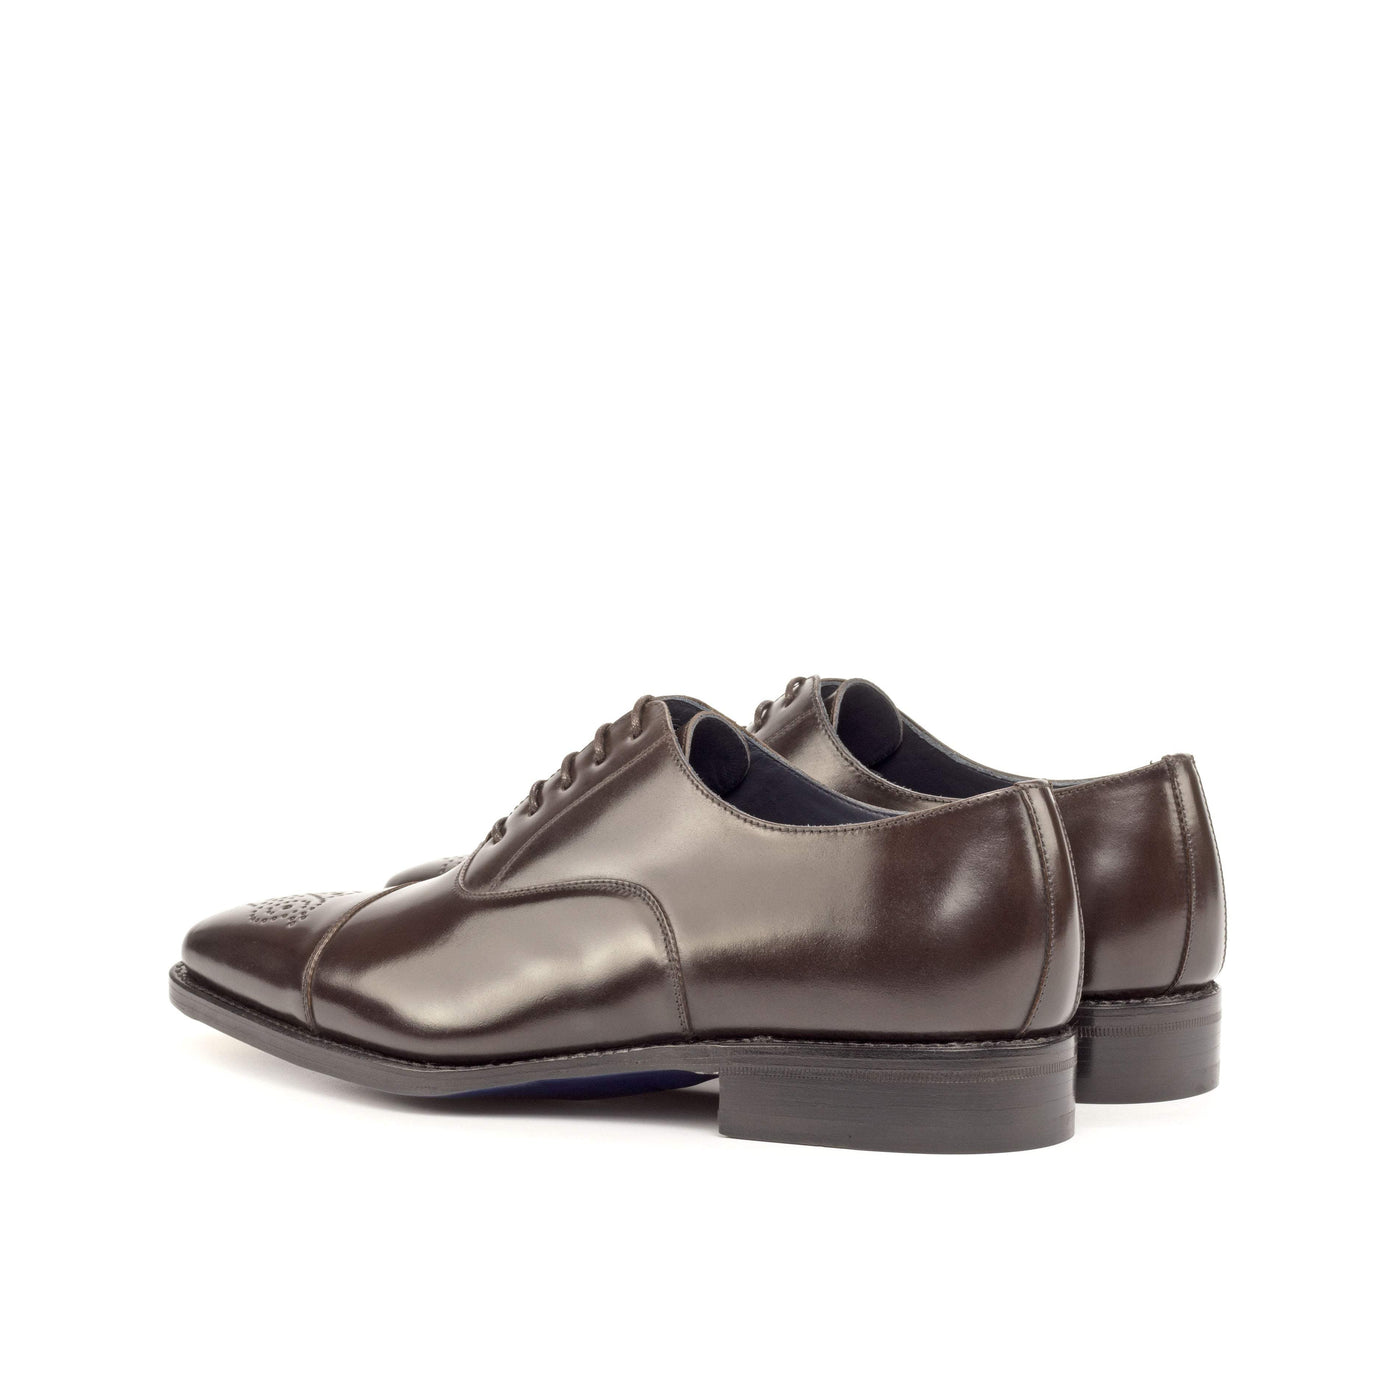 Men's Oxford Shoes Leather Goodyear Welt Dark Brown 4680 4- MERRIMIUM